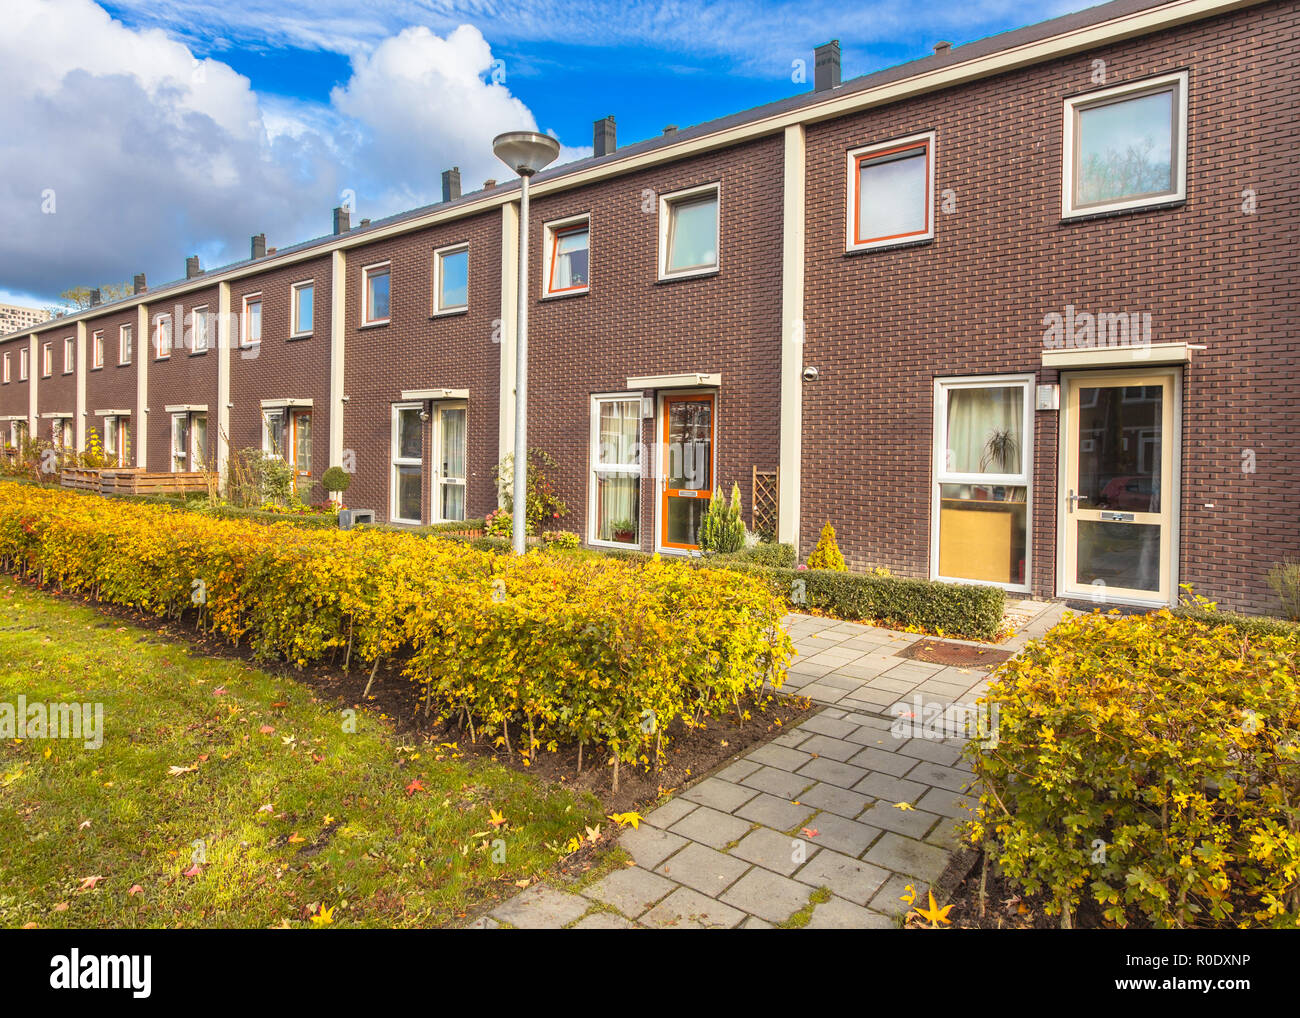 New Small Suburban Neighborhood Terraced Houses in Europe Stock Photo